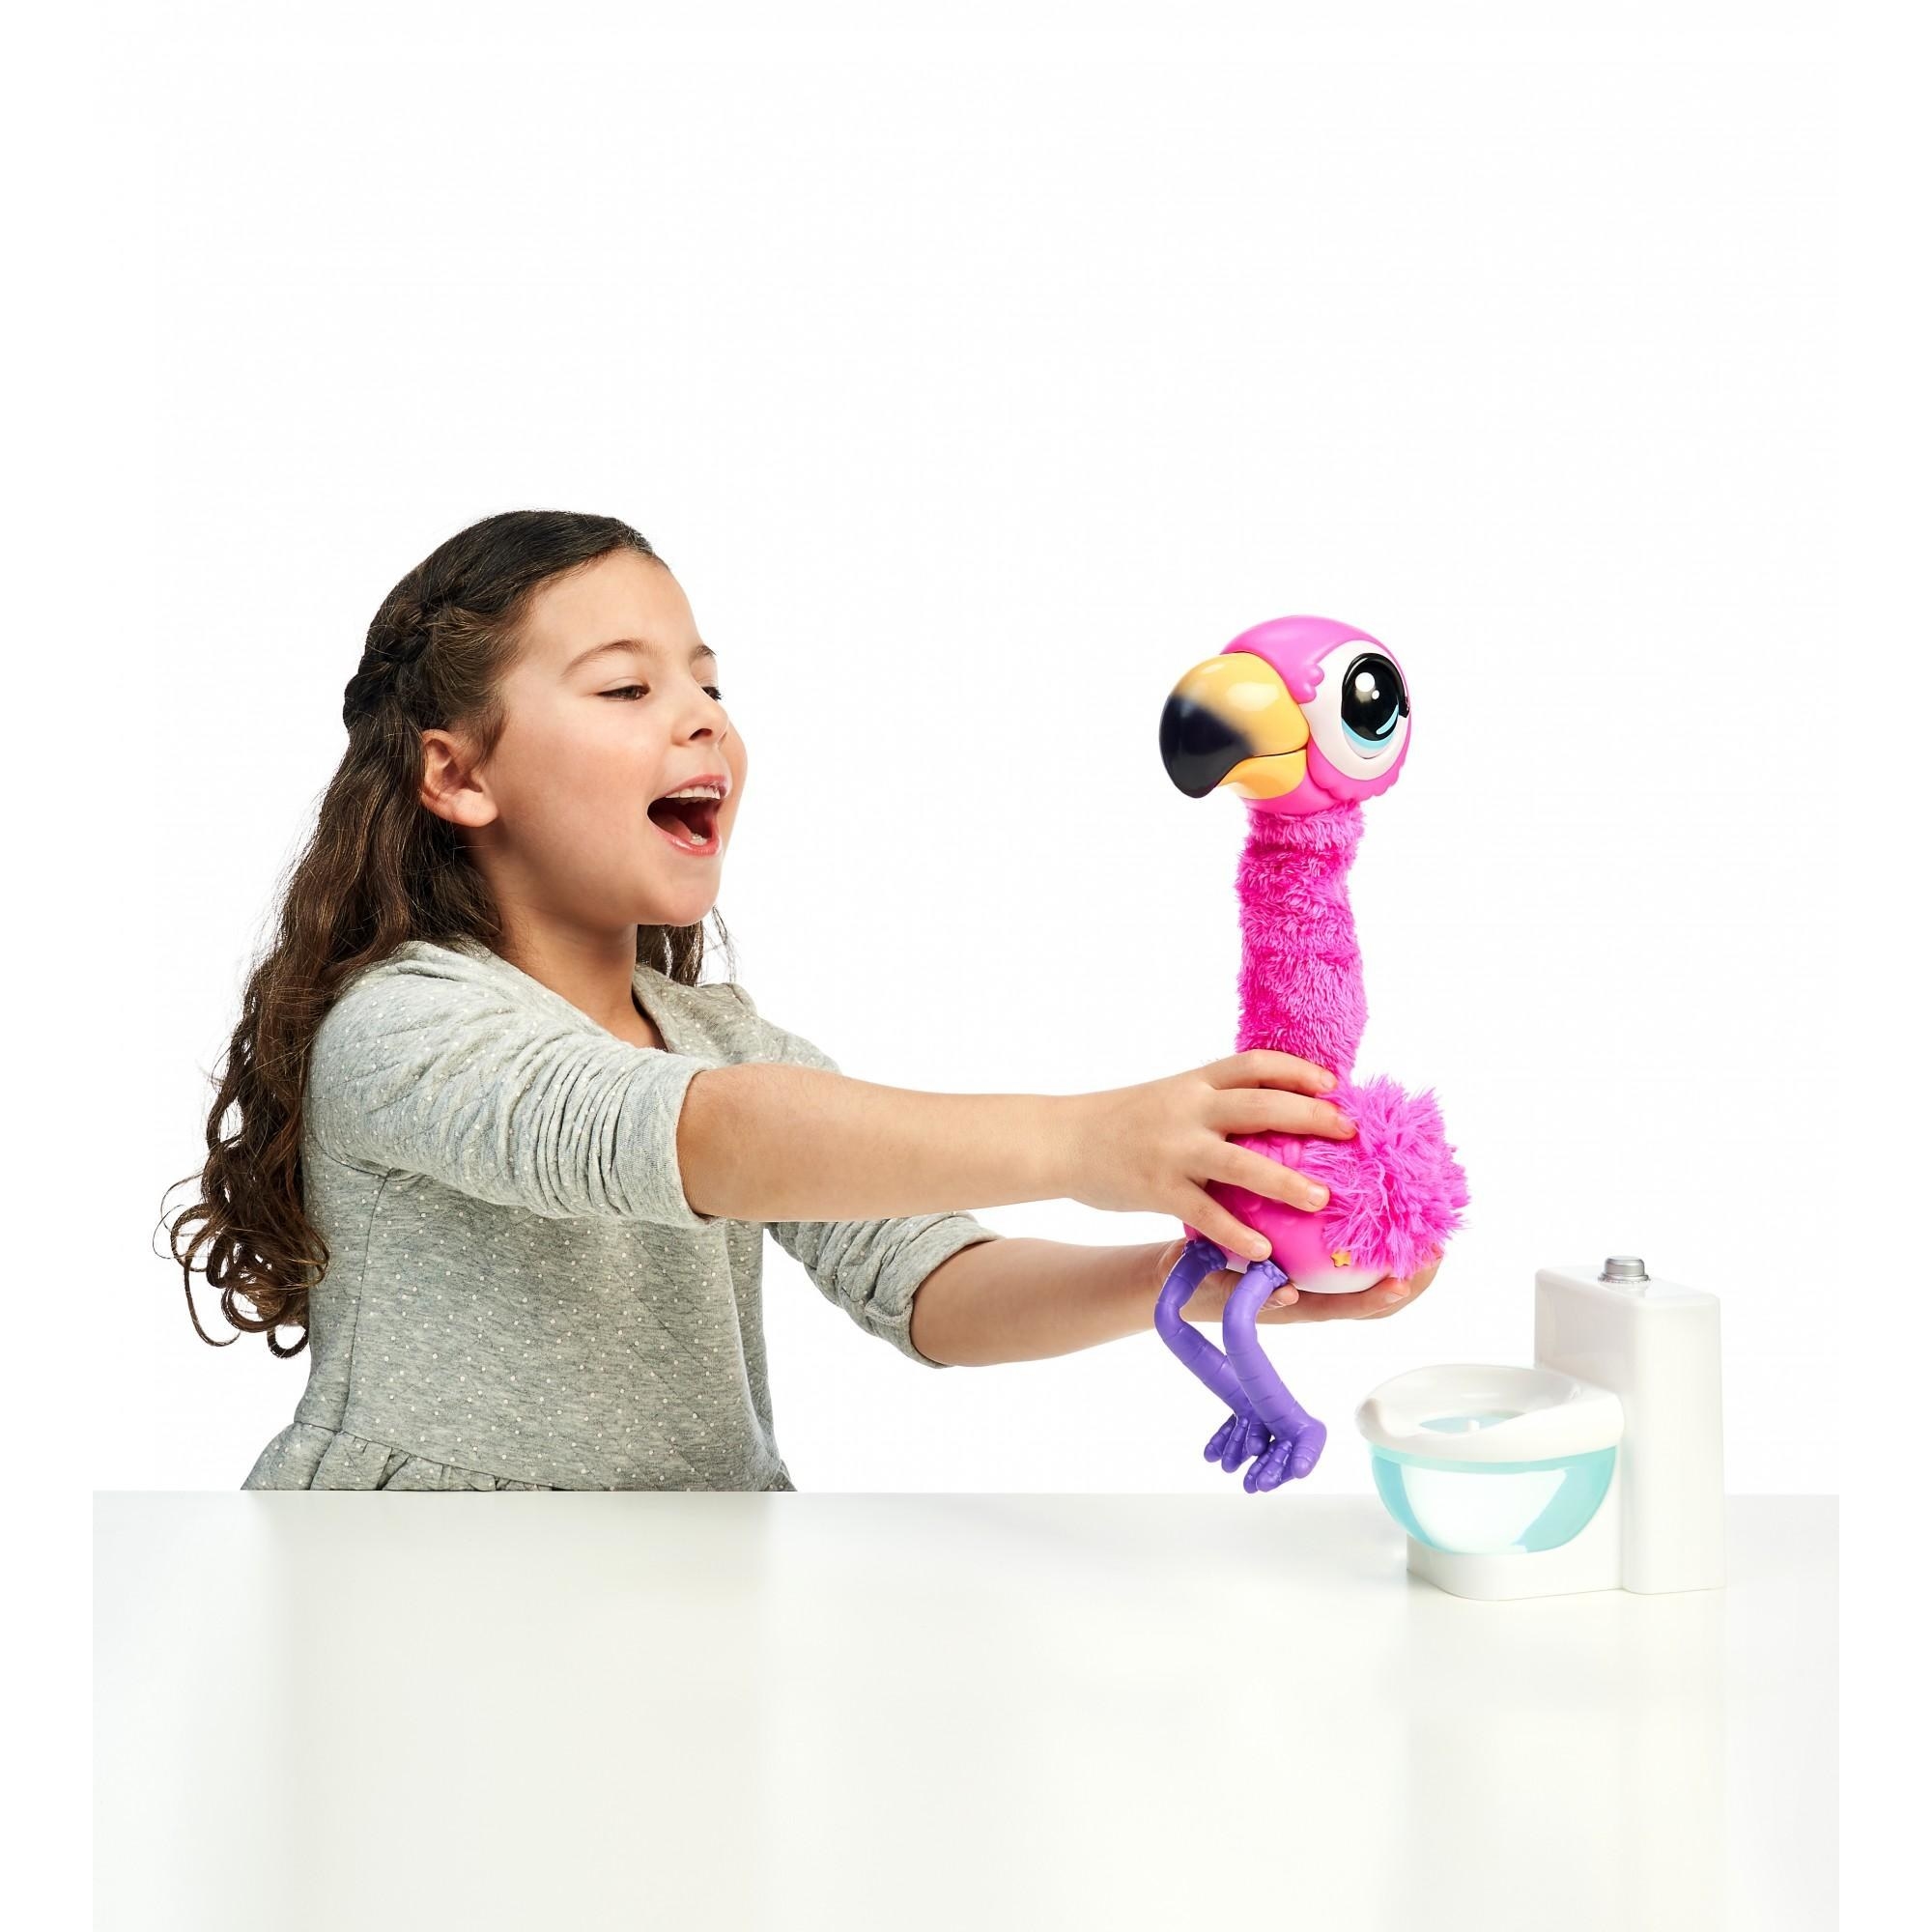 Child playing with Gotta Go Flamingo toy